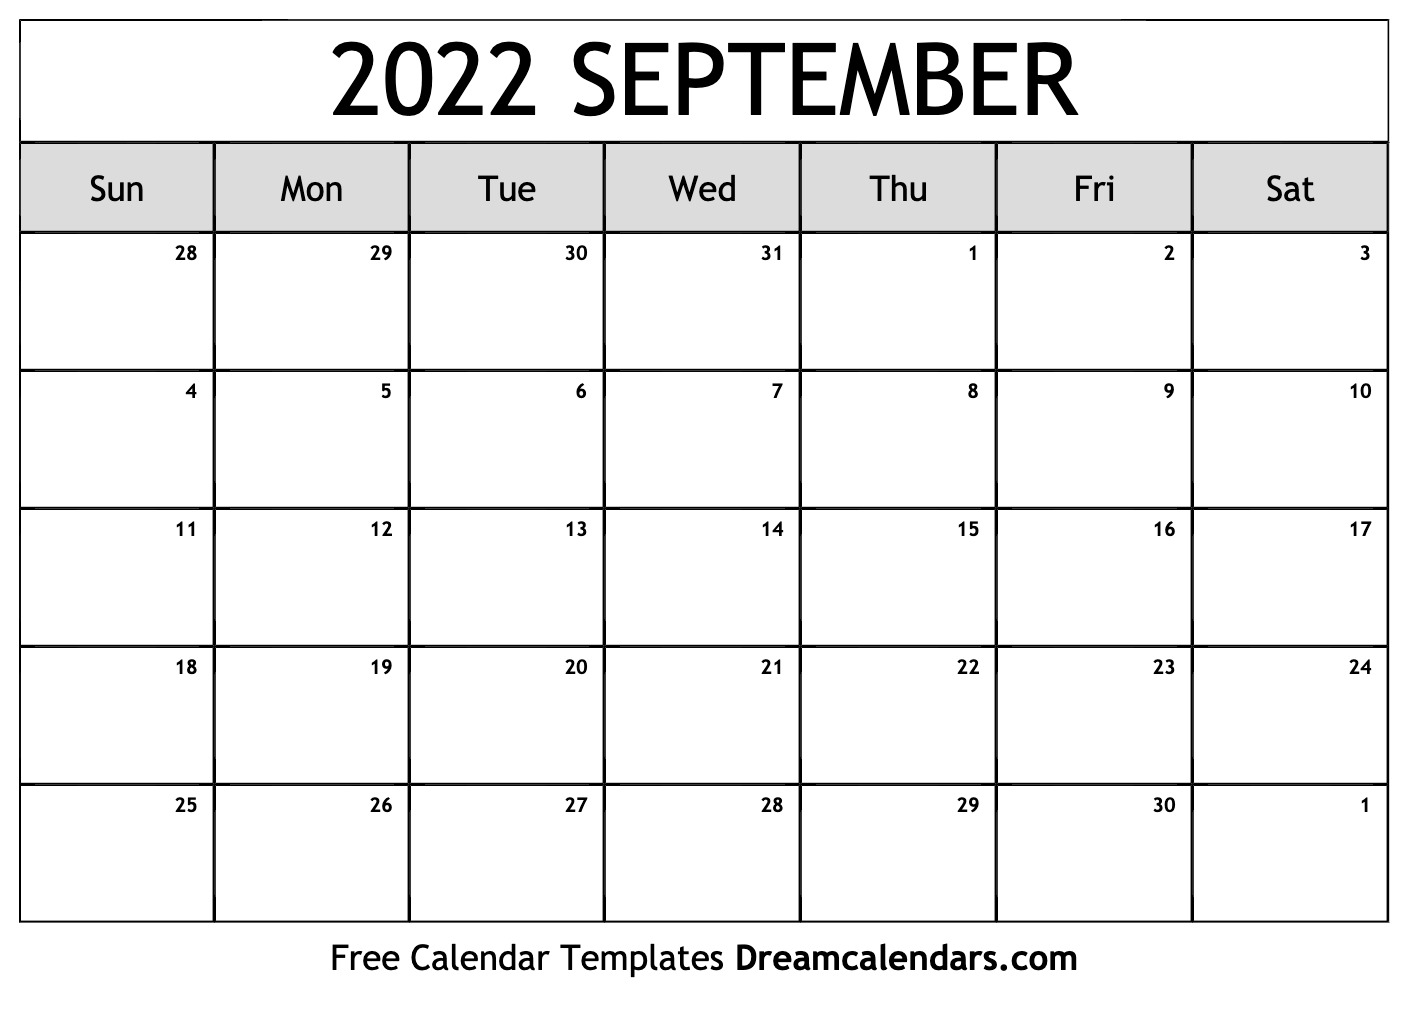 September 2022 Calendar Free Printable Download Printable September 2022 Calendars